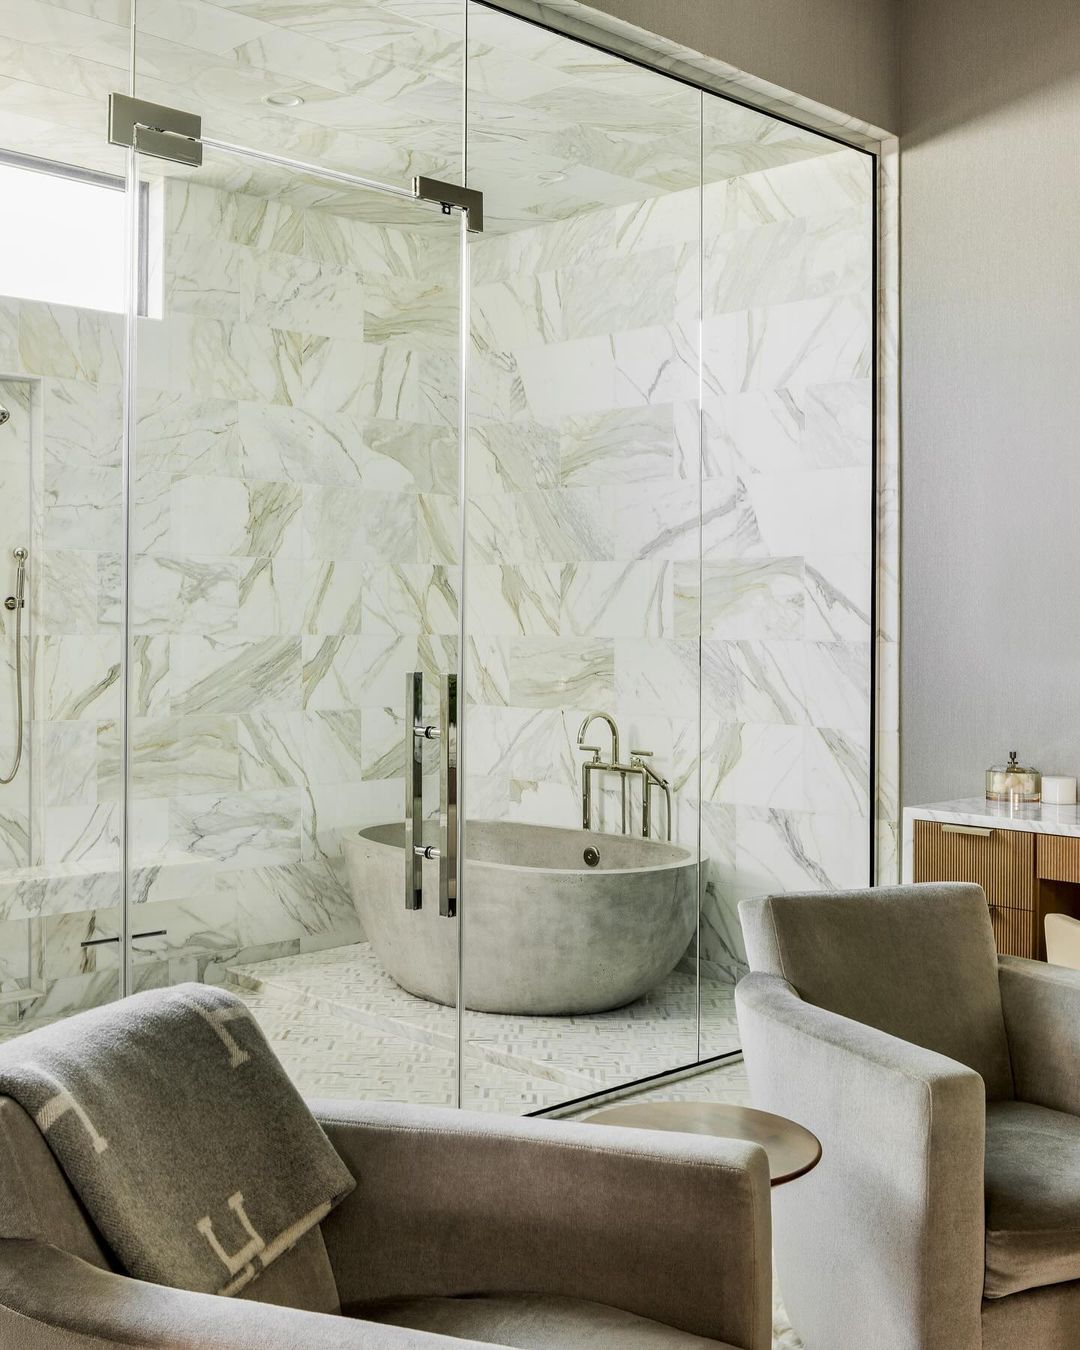 desain kamar mandi utama artistik 01 » Desain Kamar Mandi Utama yang Menonjolkan Nilai Artistik dan Estetika